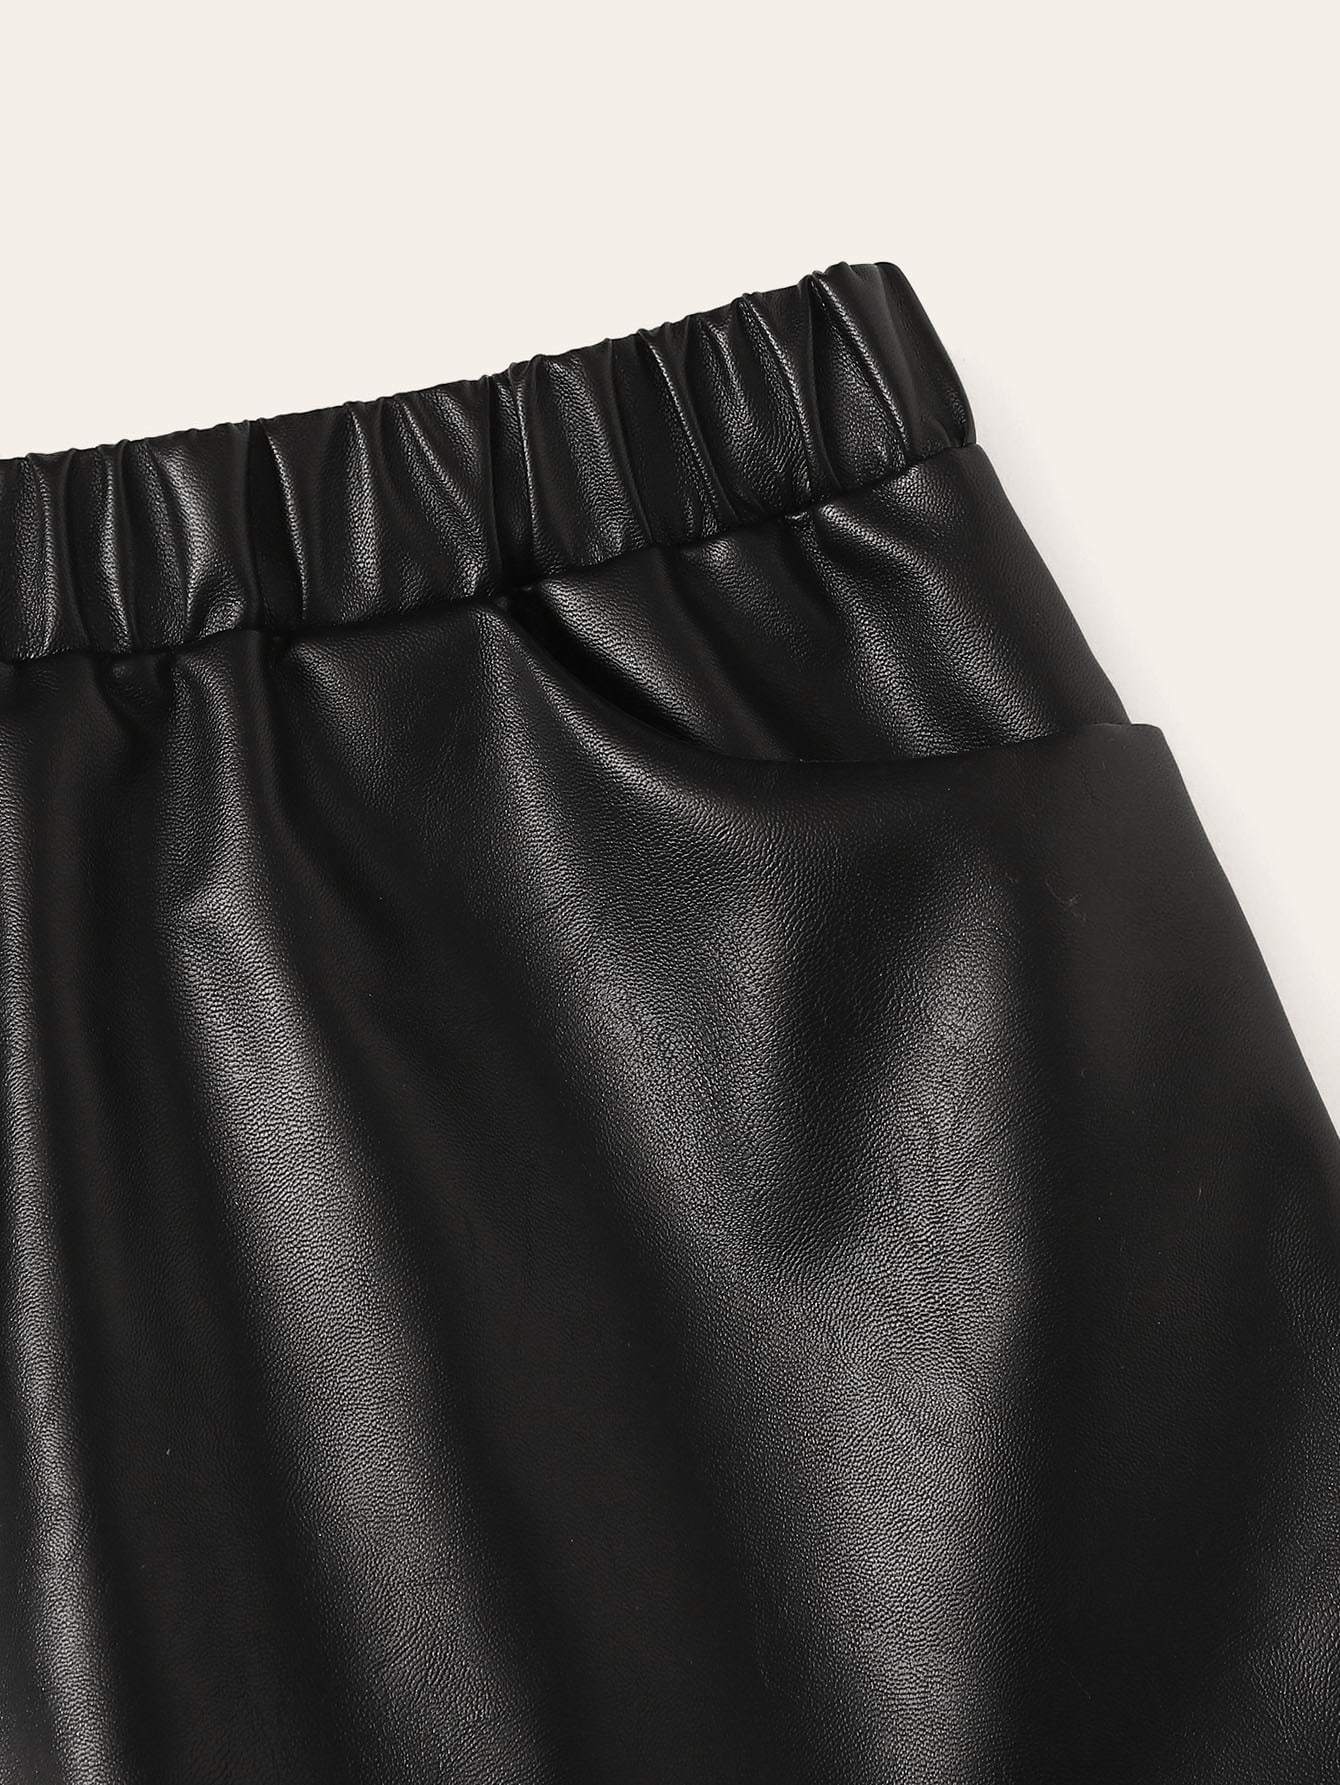 Slant Pocket PU Leather Skirt - INS | Online Fashion Free Shipping Clothing, Dresses, Tops, Shoes